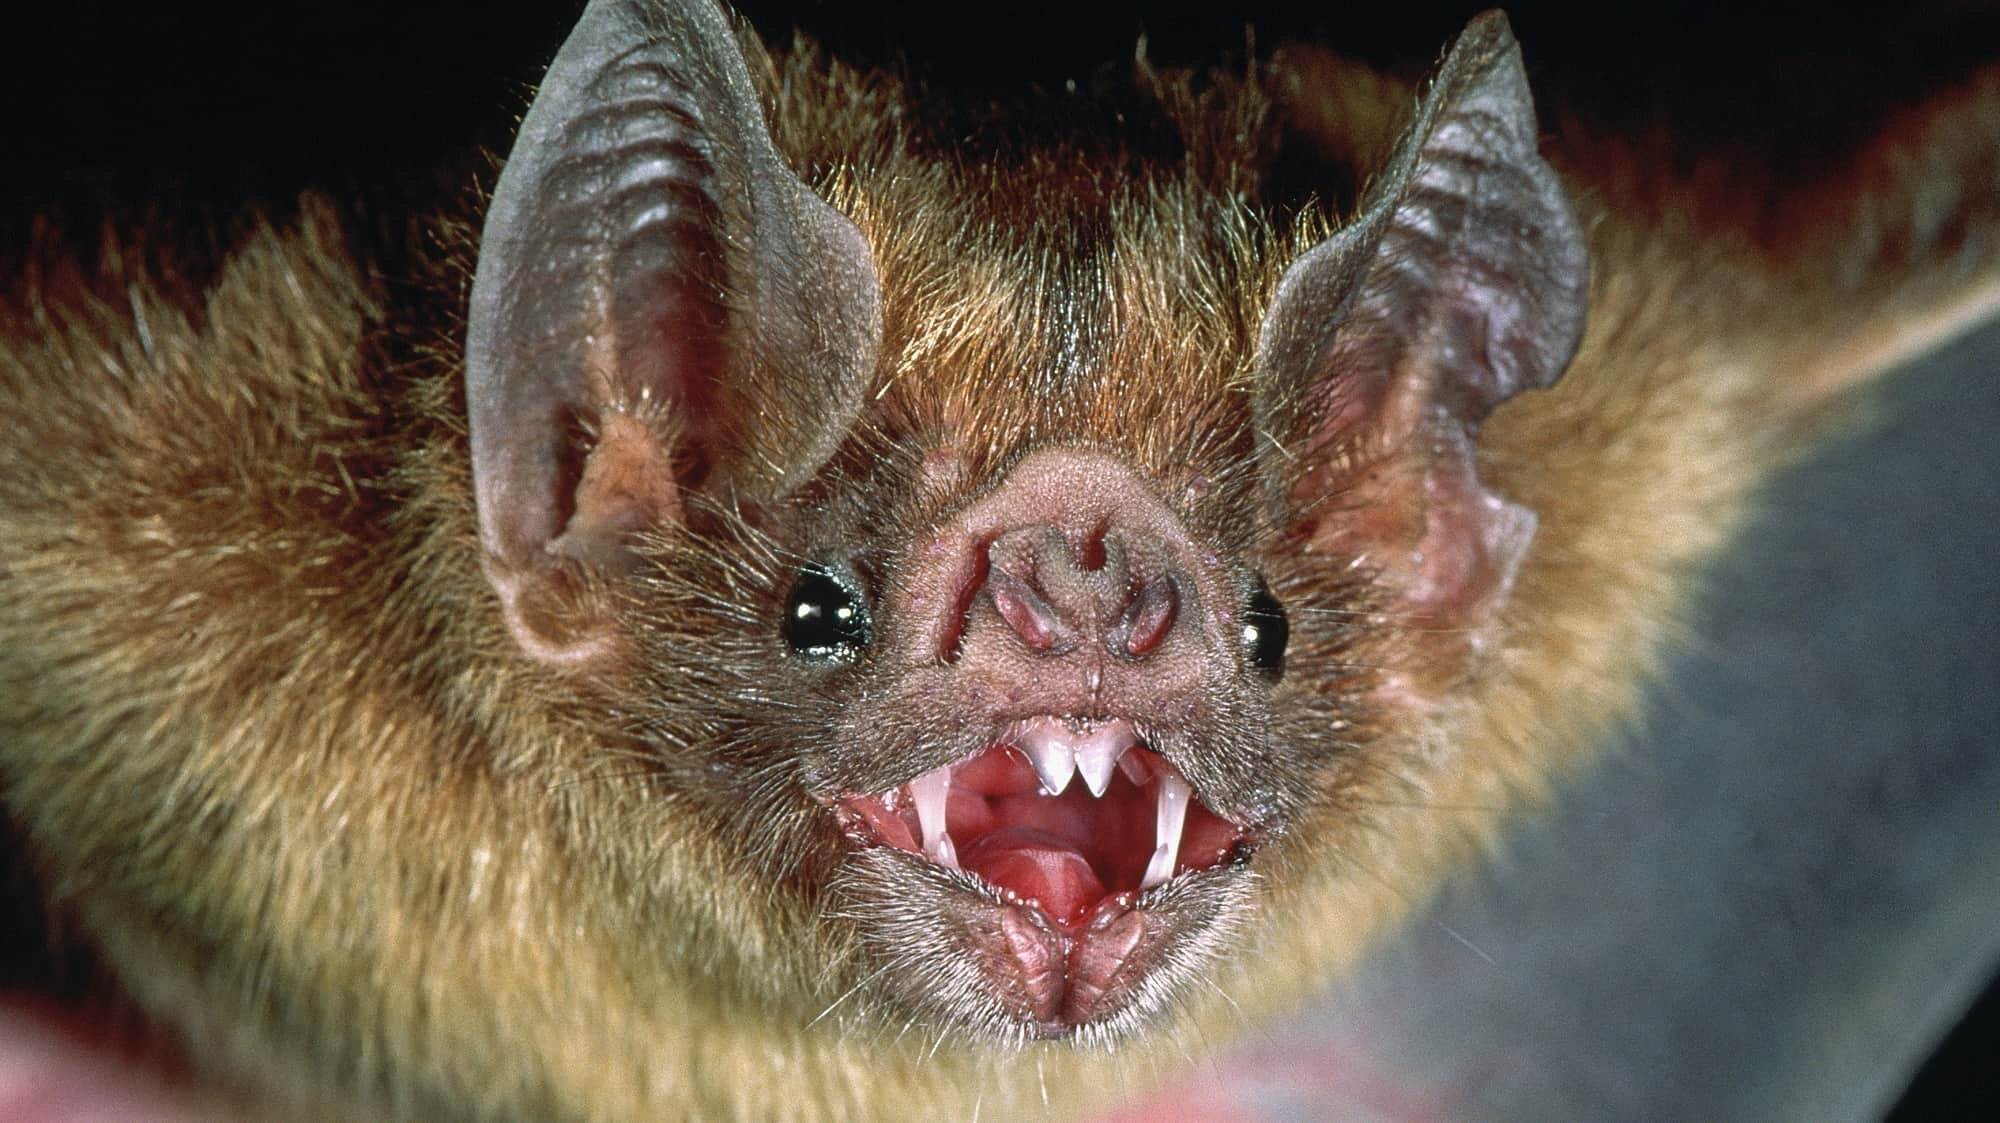 Halton Public Health confirms first rabid bat of the year found in Burlington